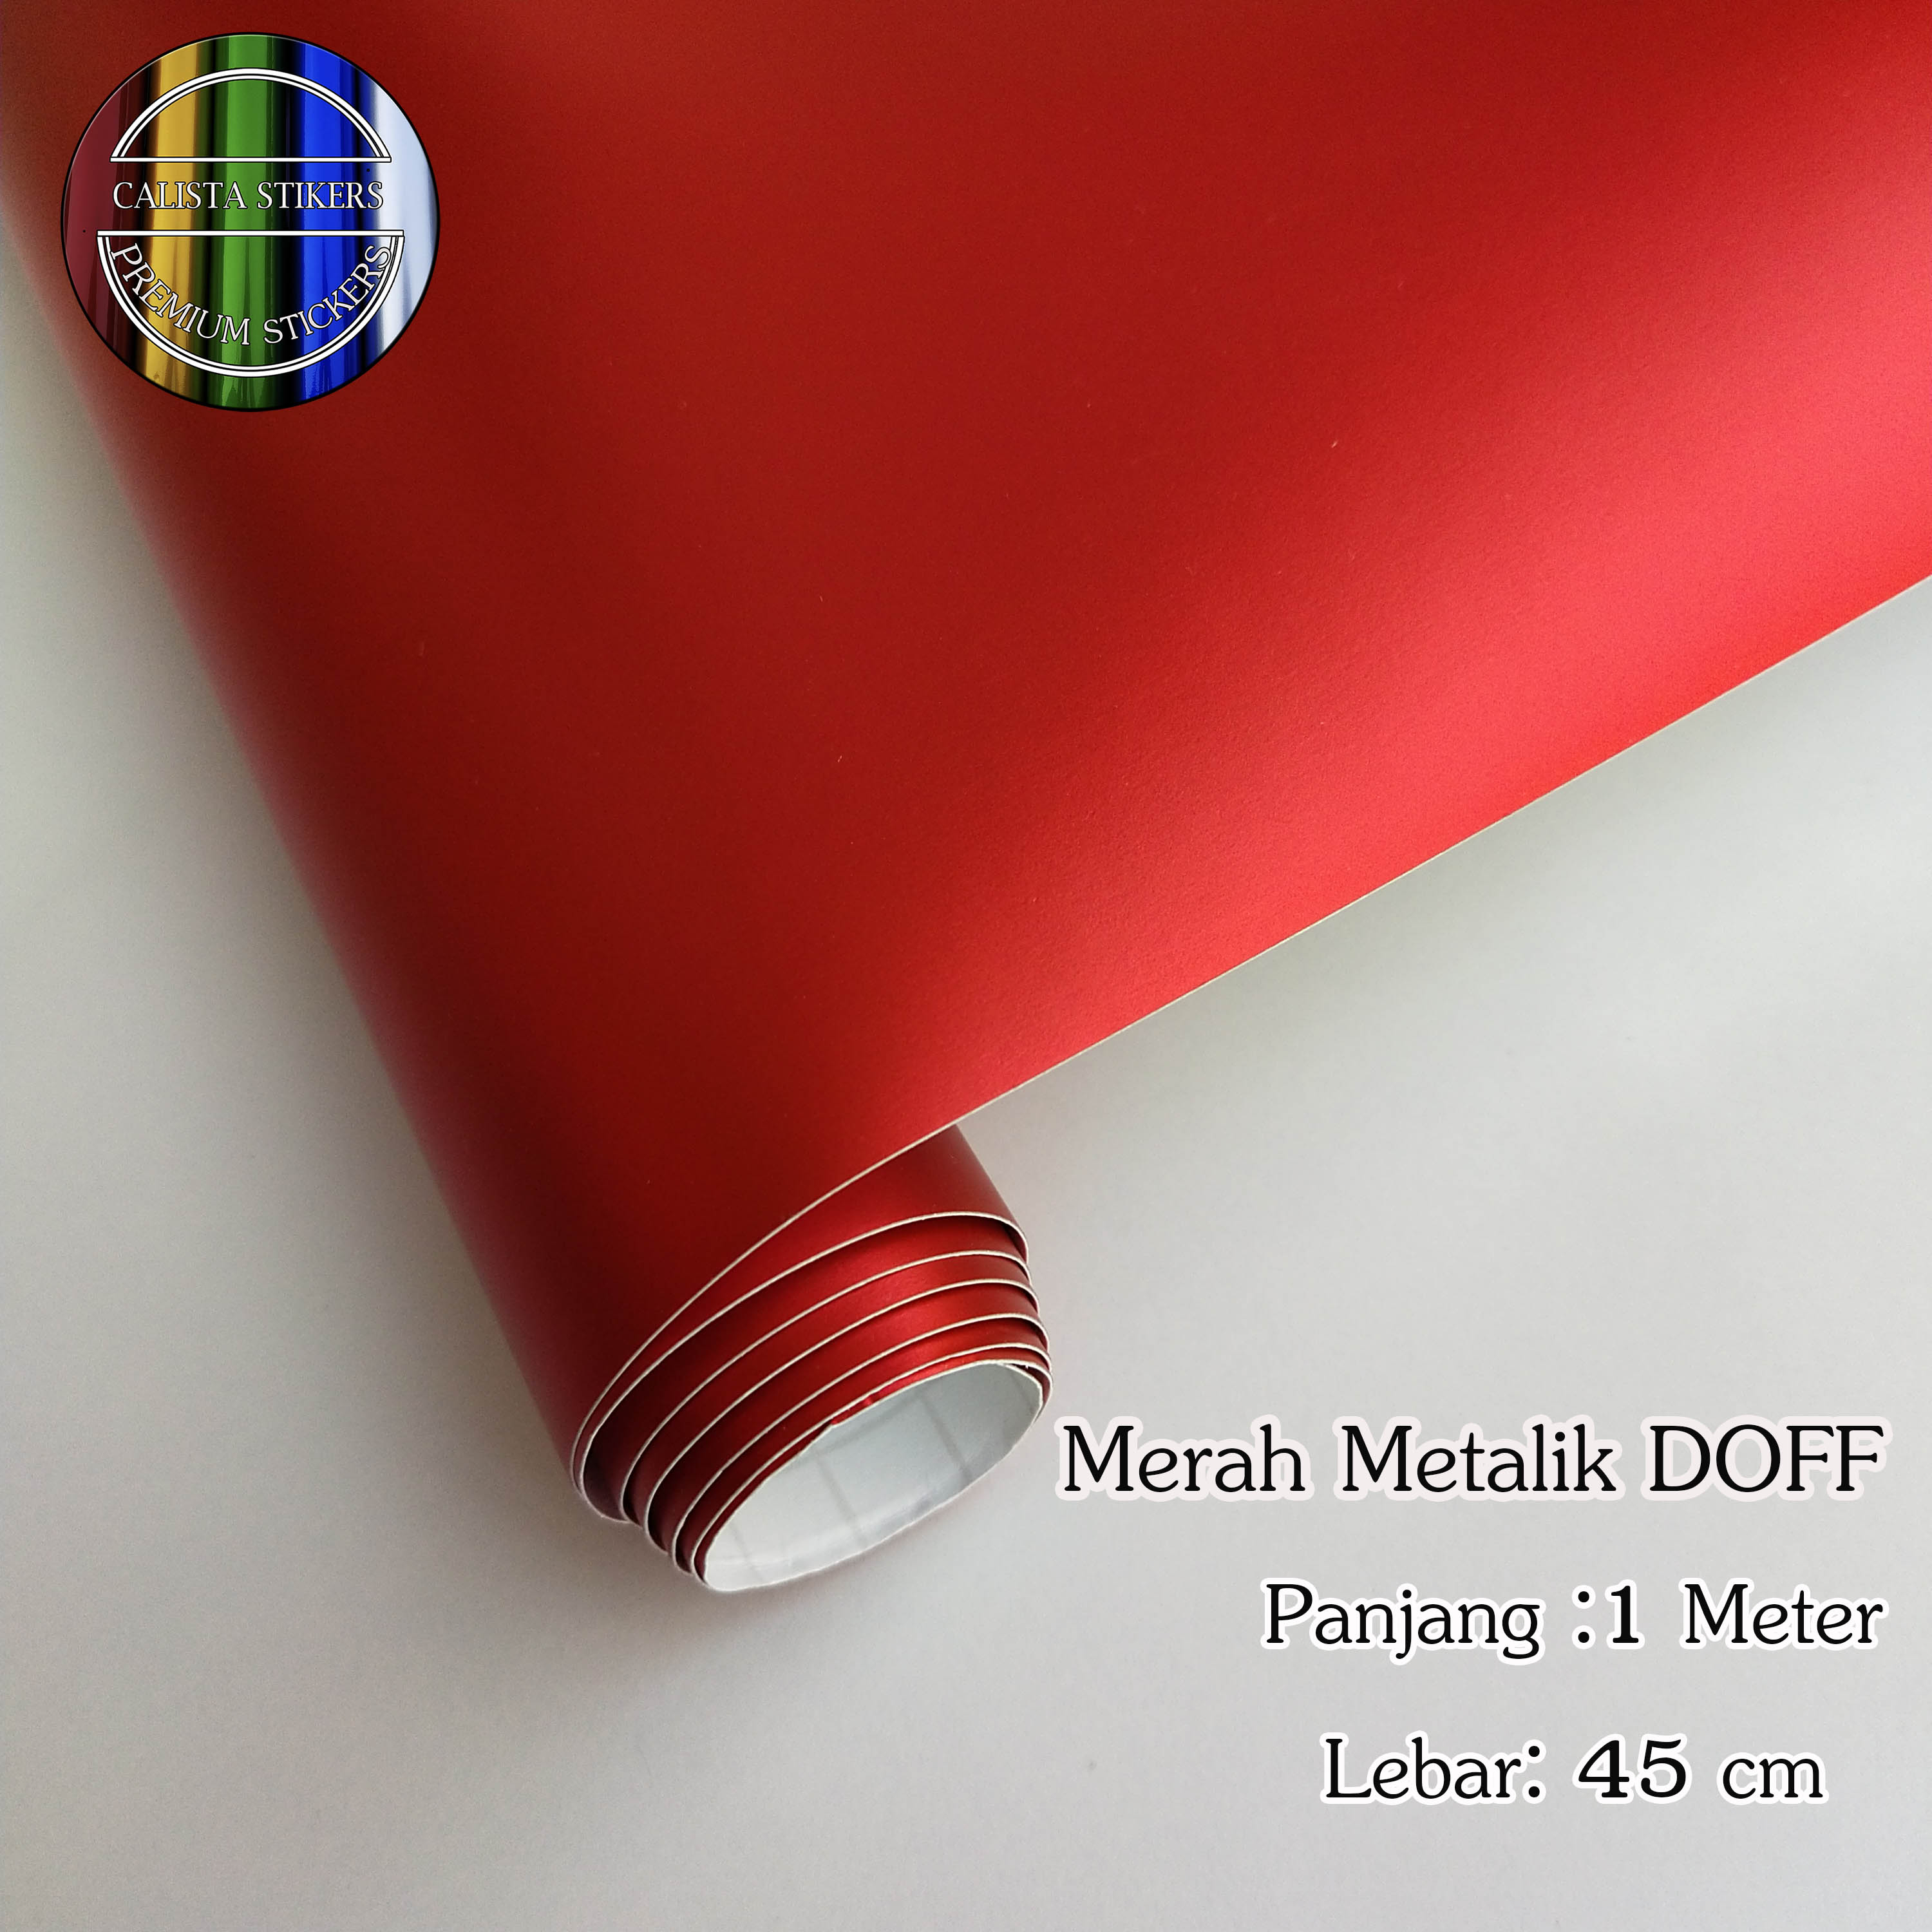 Stiker Skotlet Infinity Warna Metalik Merah Doff Ukuran 1 Meter X 45 Cm Lazada Indonesia